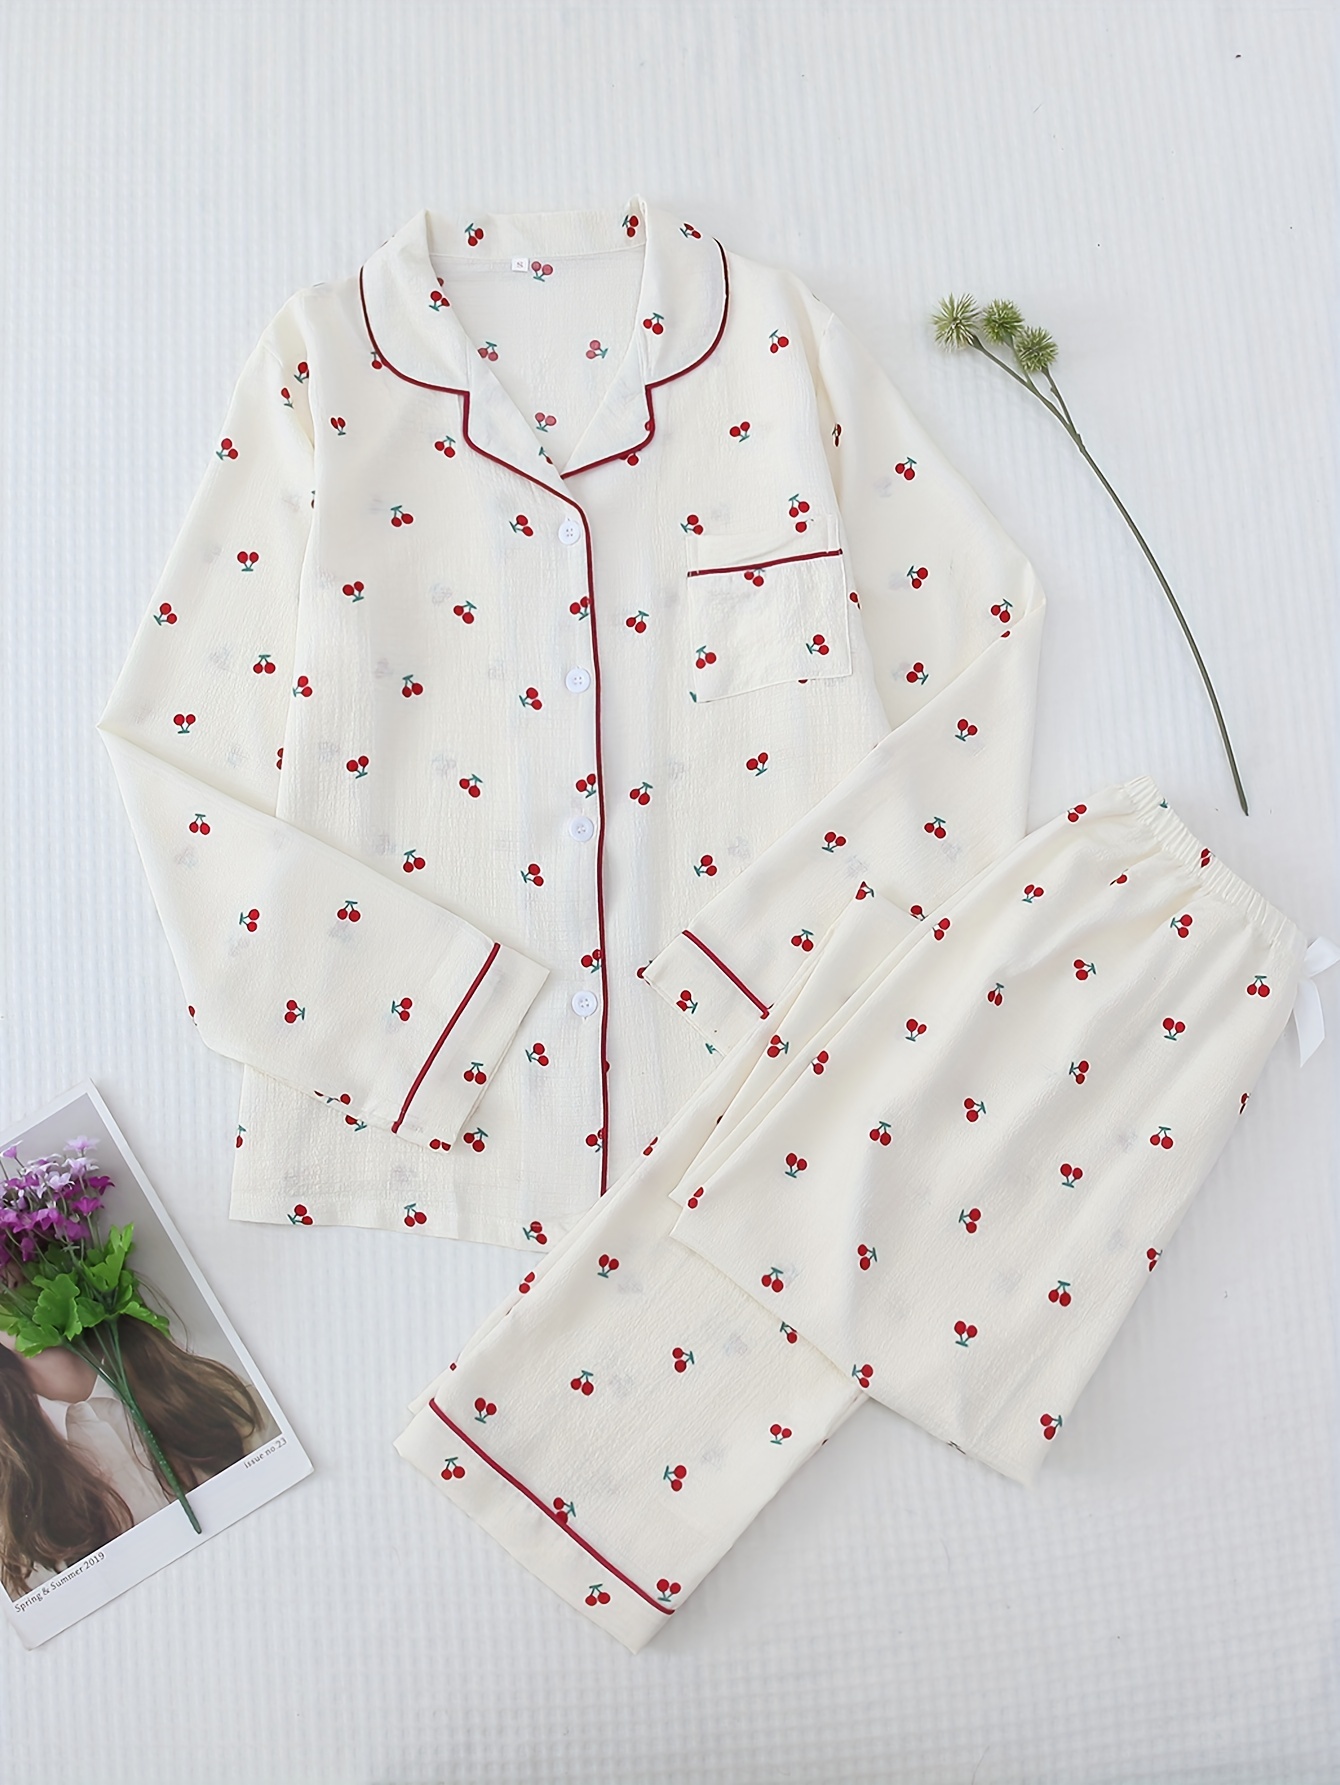 Qtinghua Pajama Set for Women Cute Cherry Print Short Sleeve Tee and Shorts  Lounge Sleepwear Pink L 